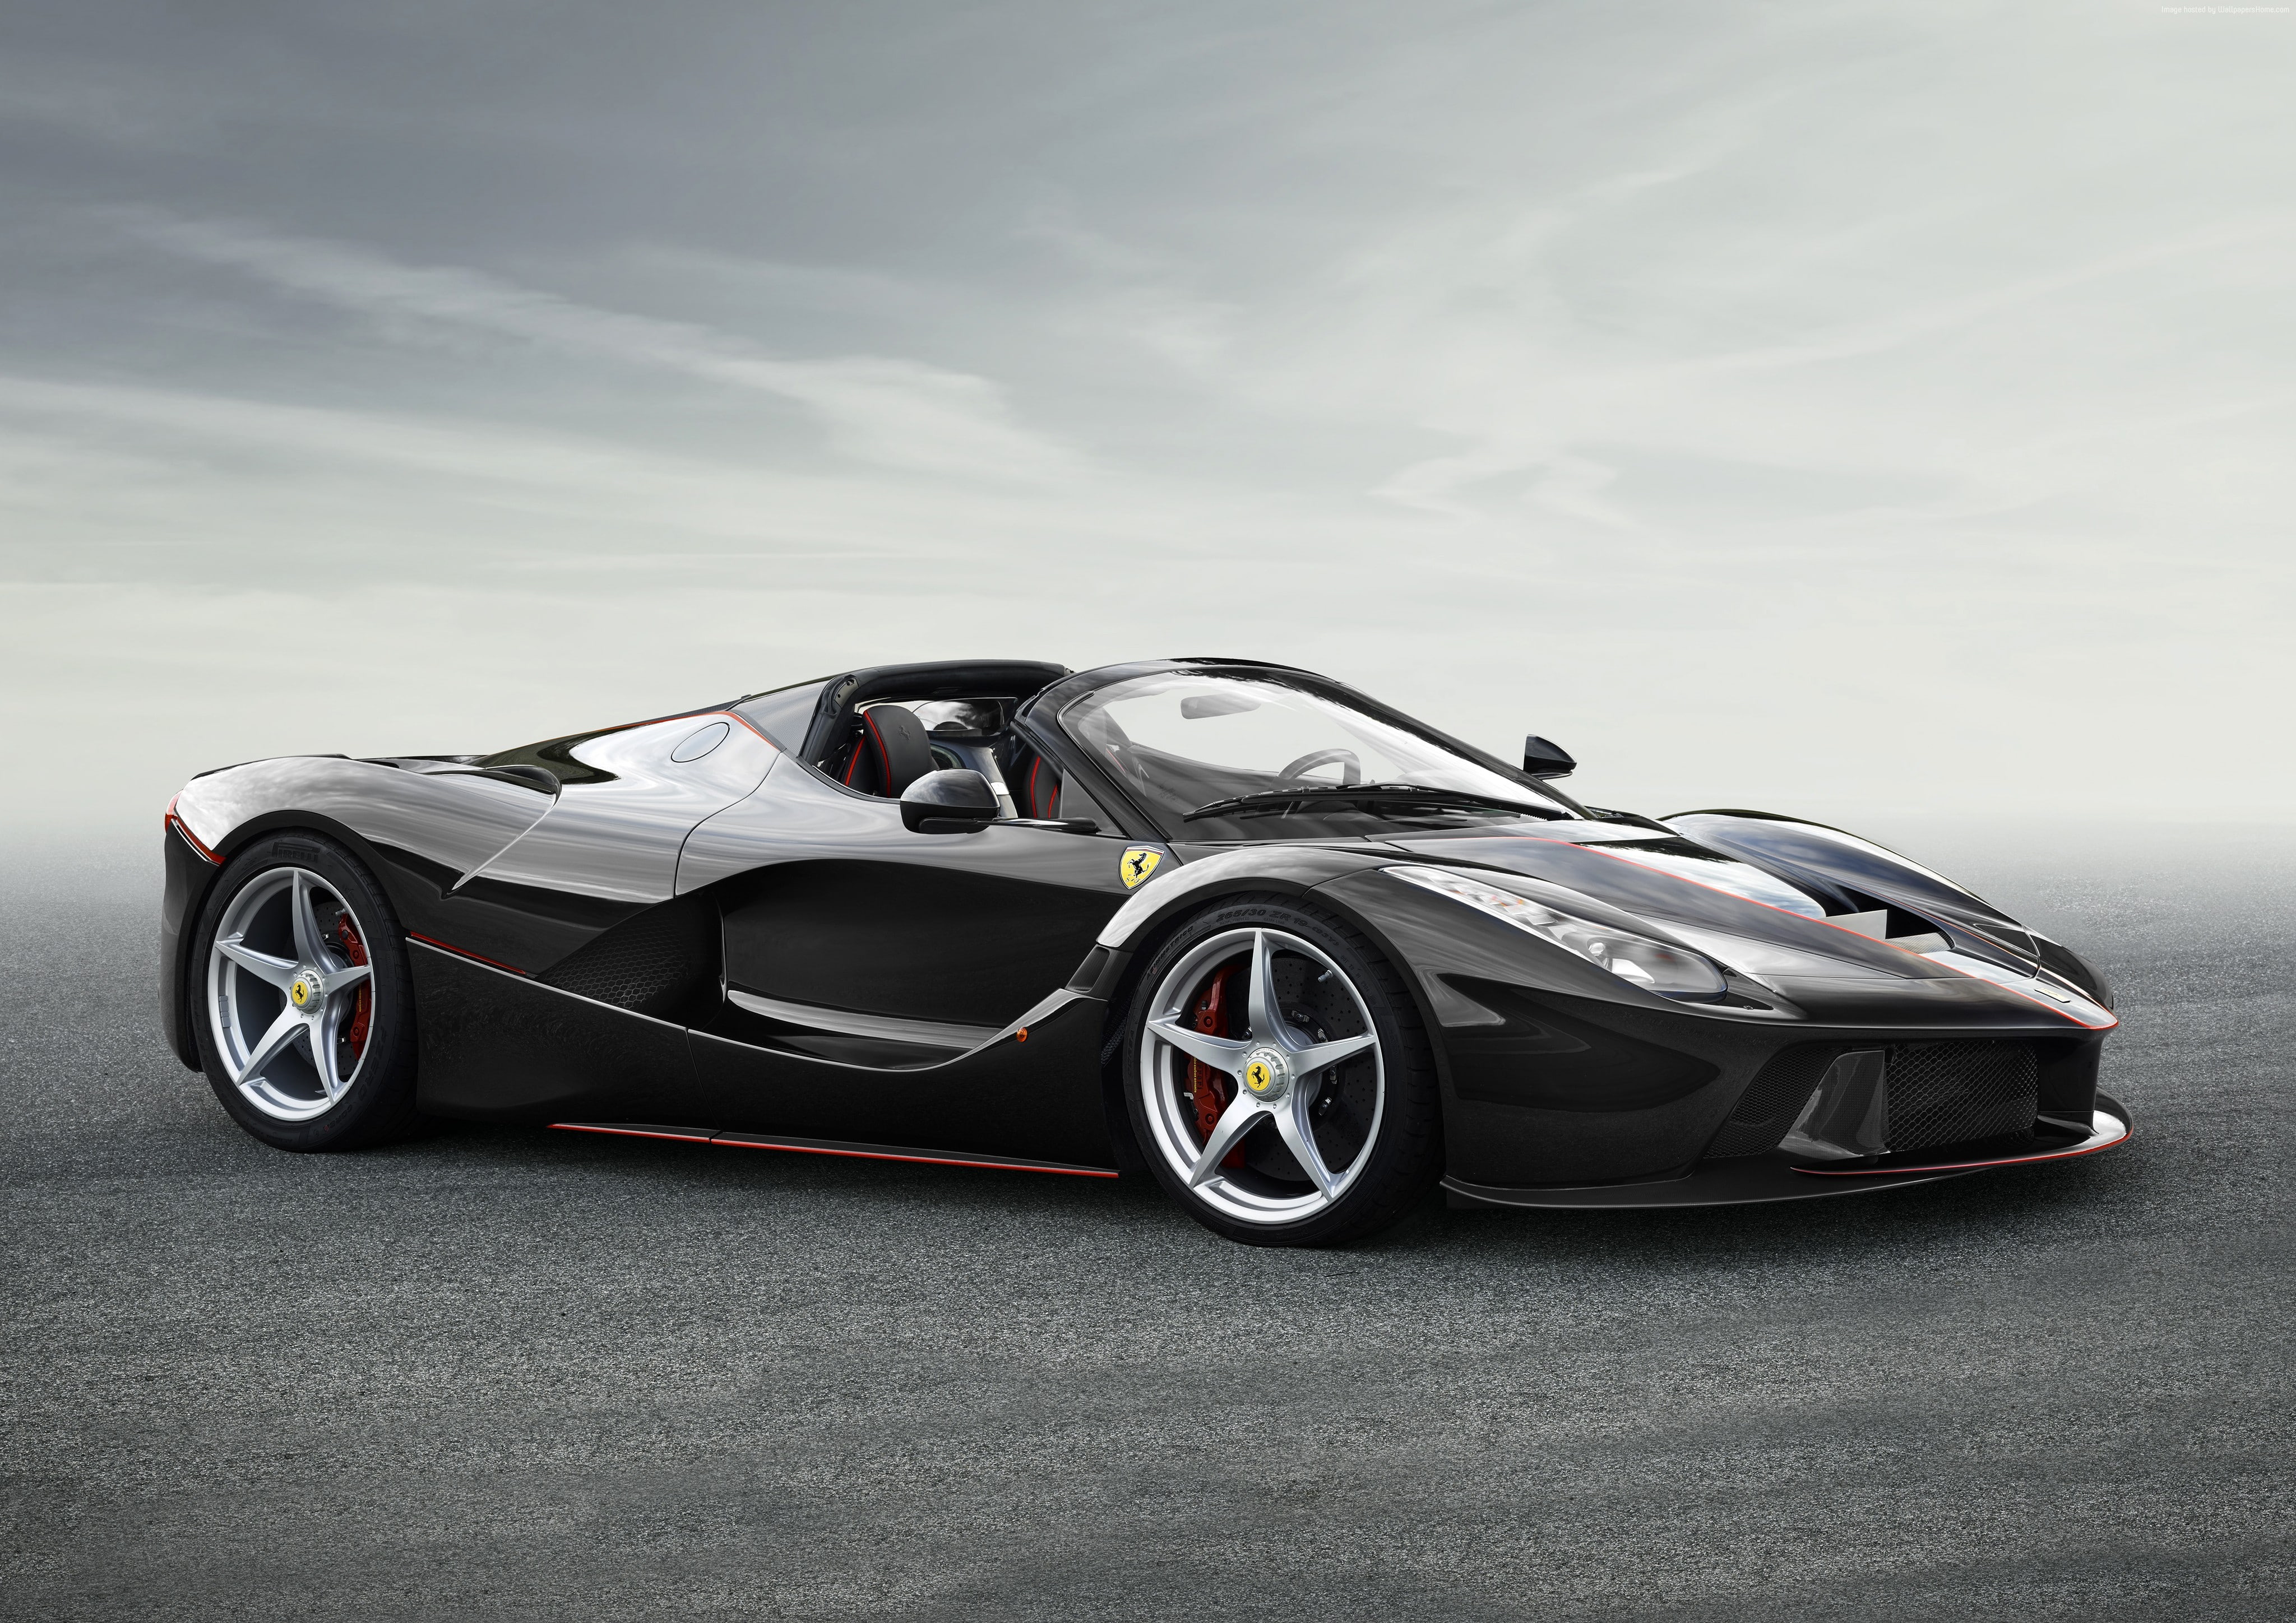 black, Ferrari LaFerrari Aperta, supercar, transportation, mode of transportation